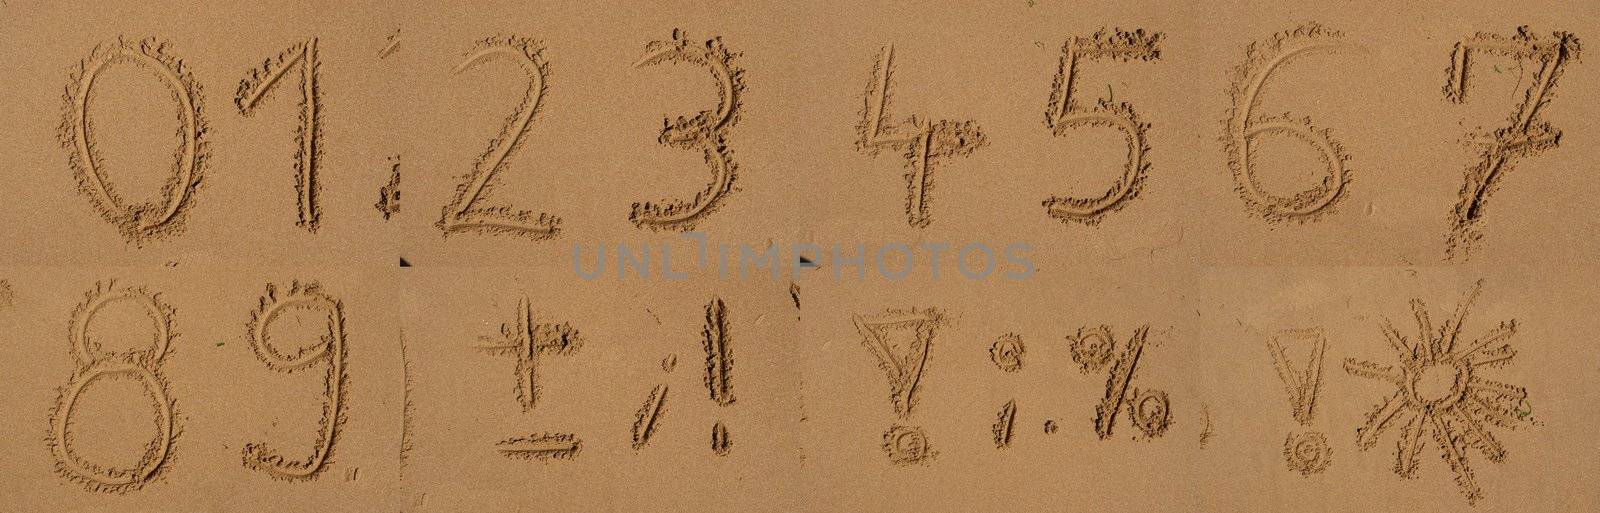 The alphabet written in sand on a beach.